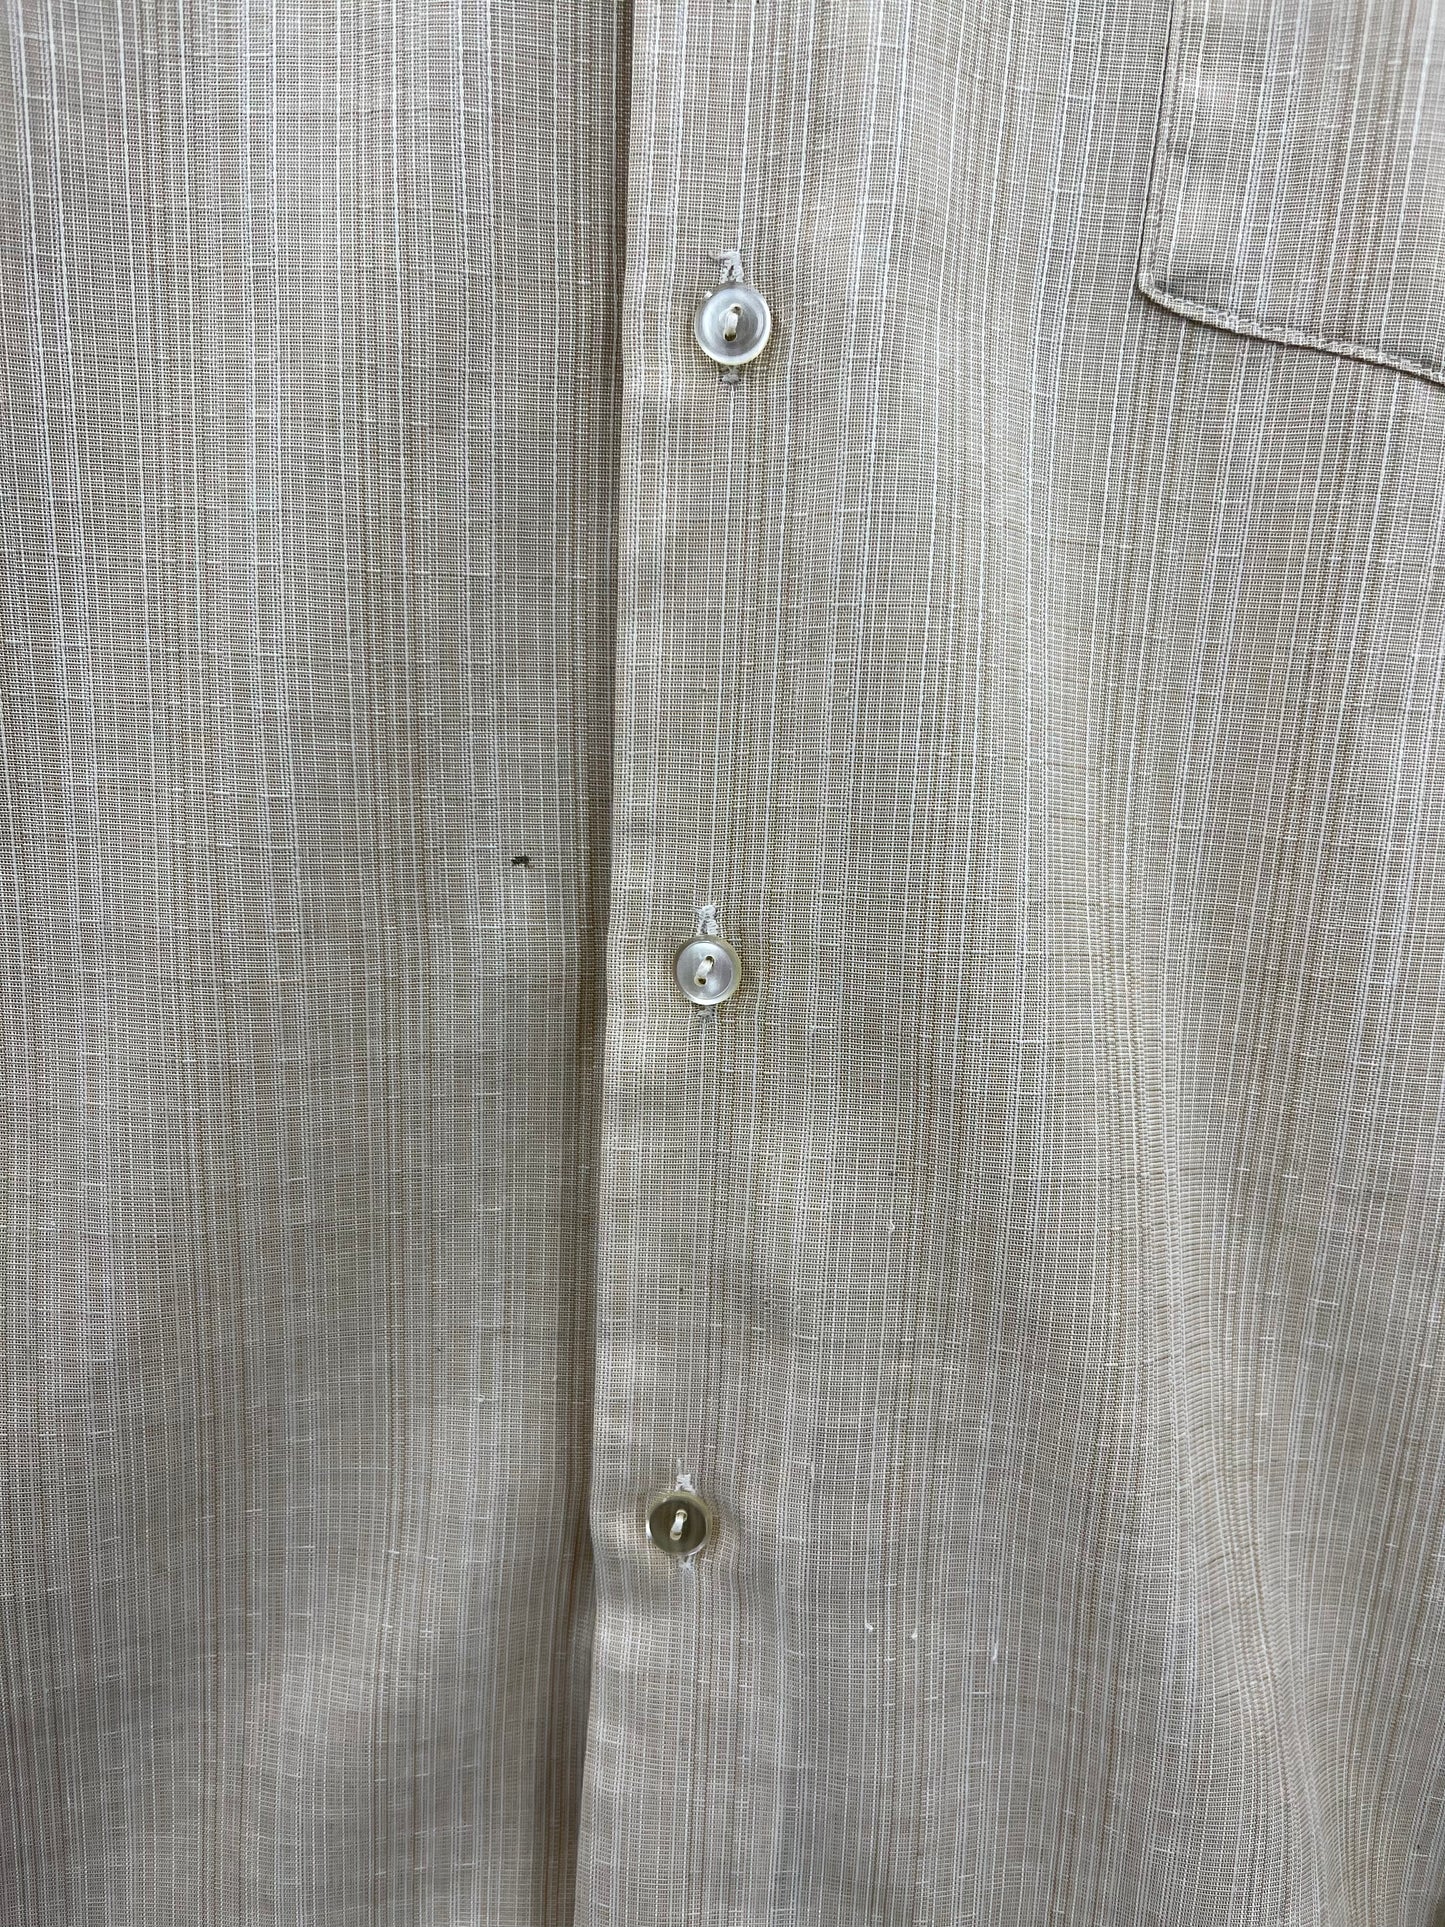 Tiklas, pellavanvärinen miesten paita, 70-luku, koko S-M